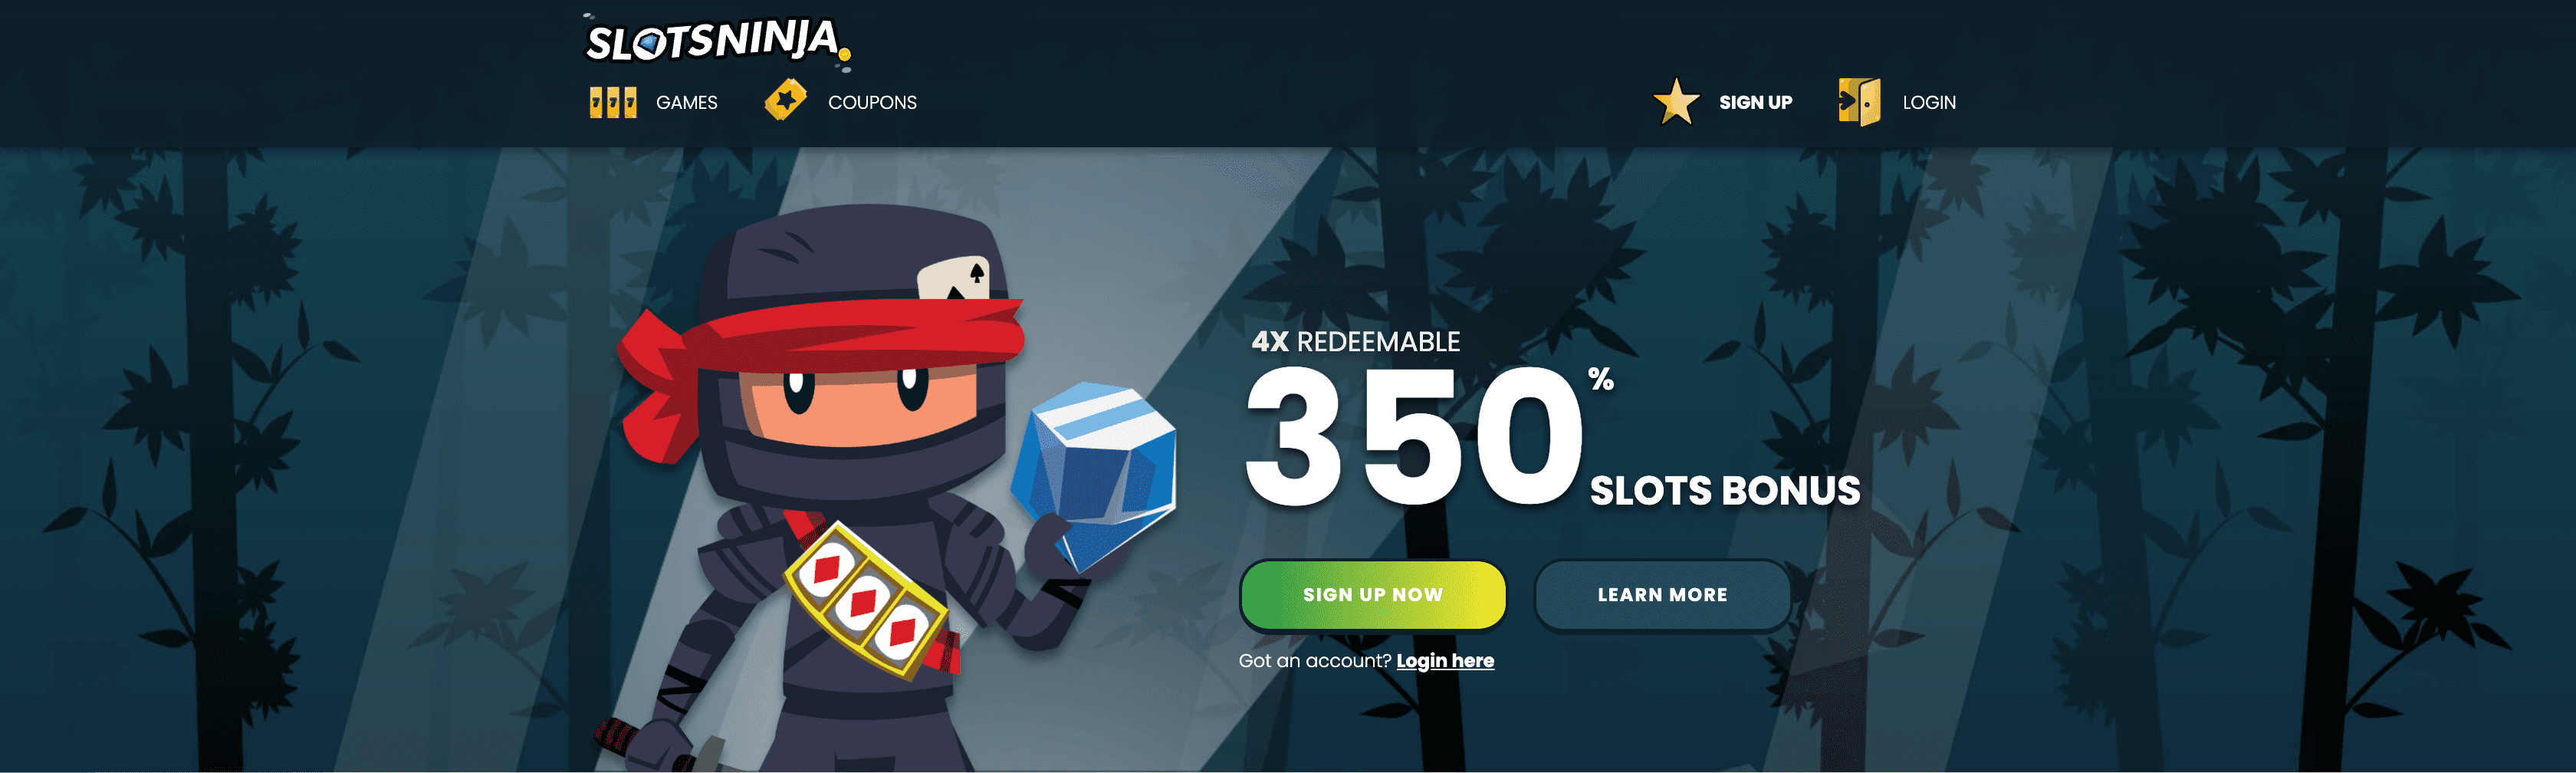 Slots Ninja Homepage